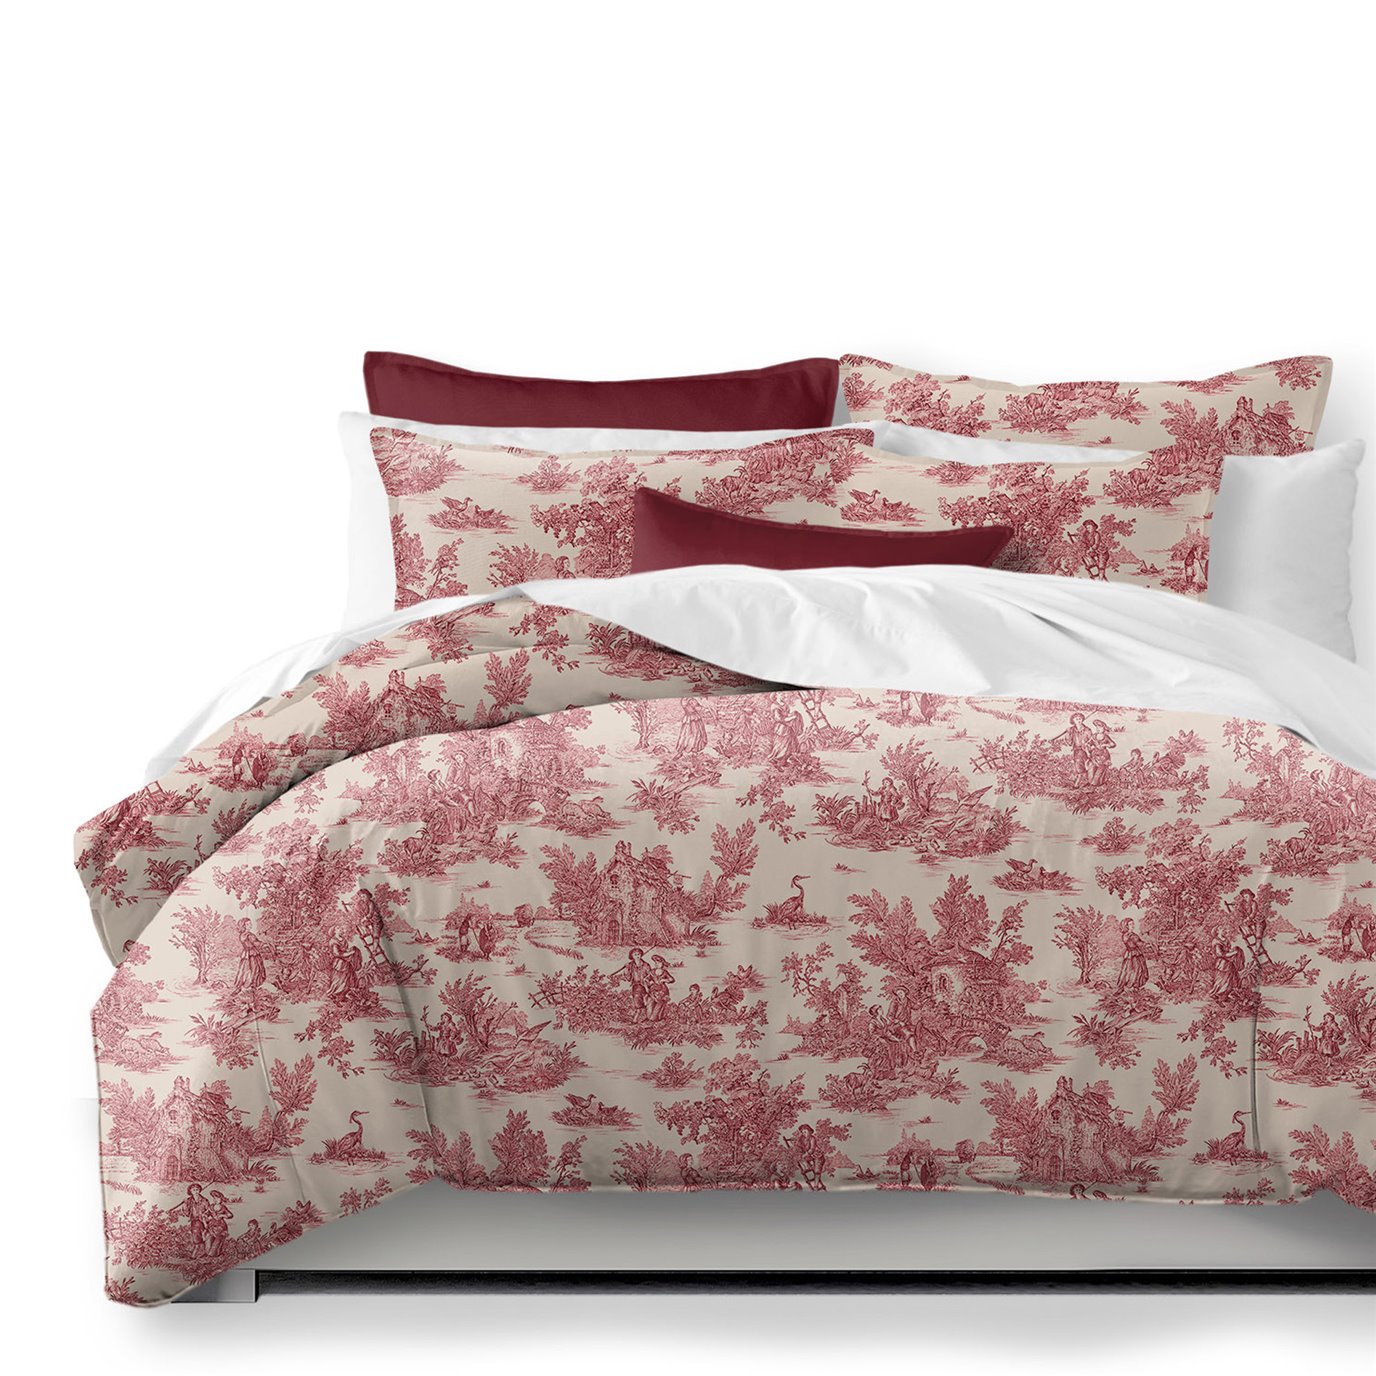 Bouclair Red Duvet Cover and Pillow Sham(s) Set - Size Full